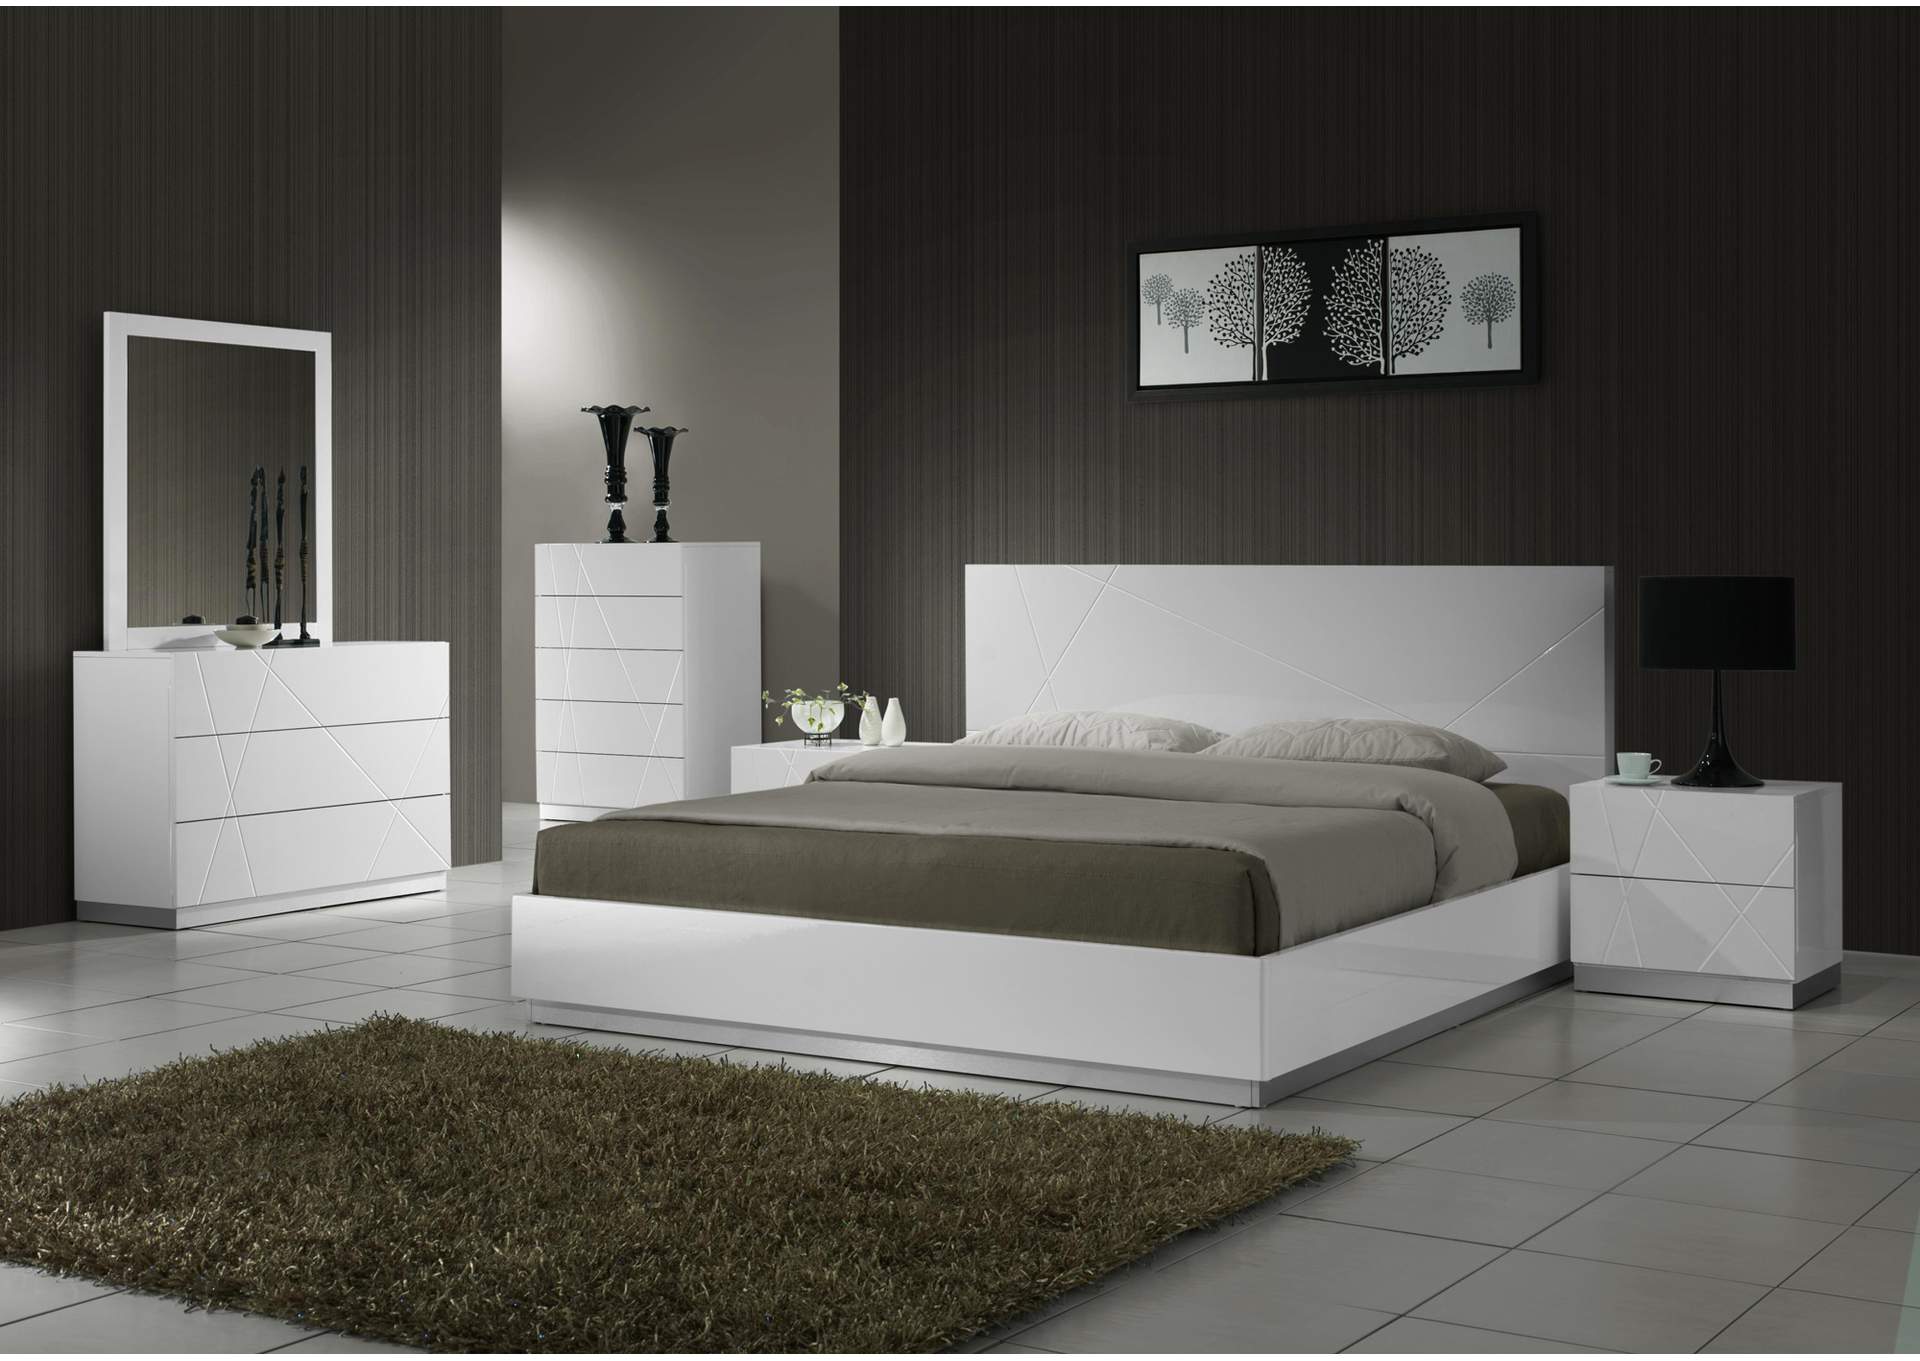 Naples Full Size Bed,J&M Furniture